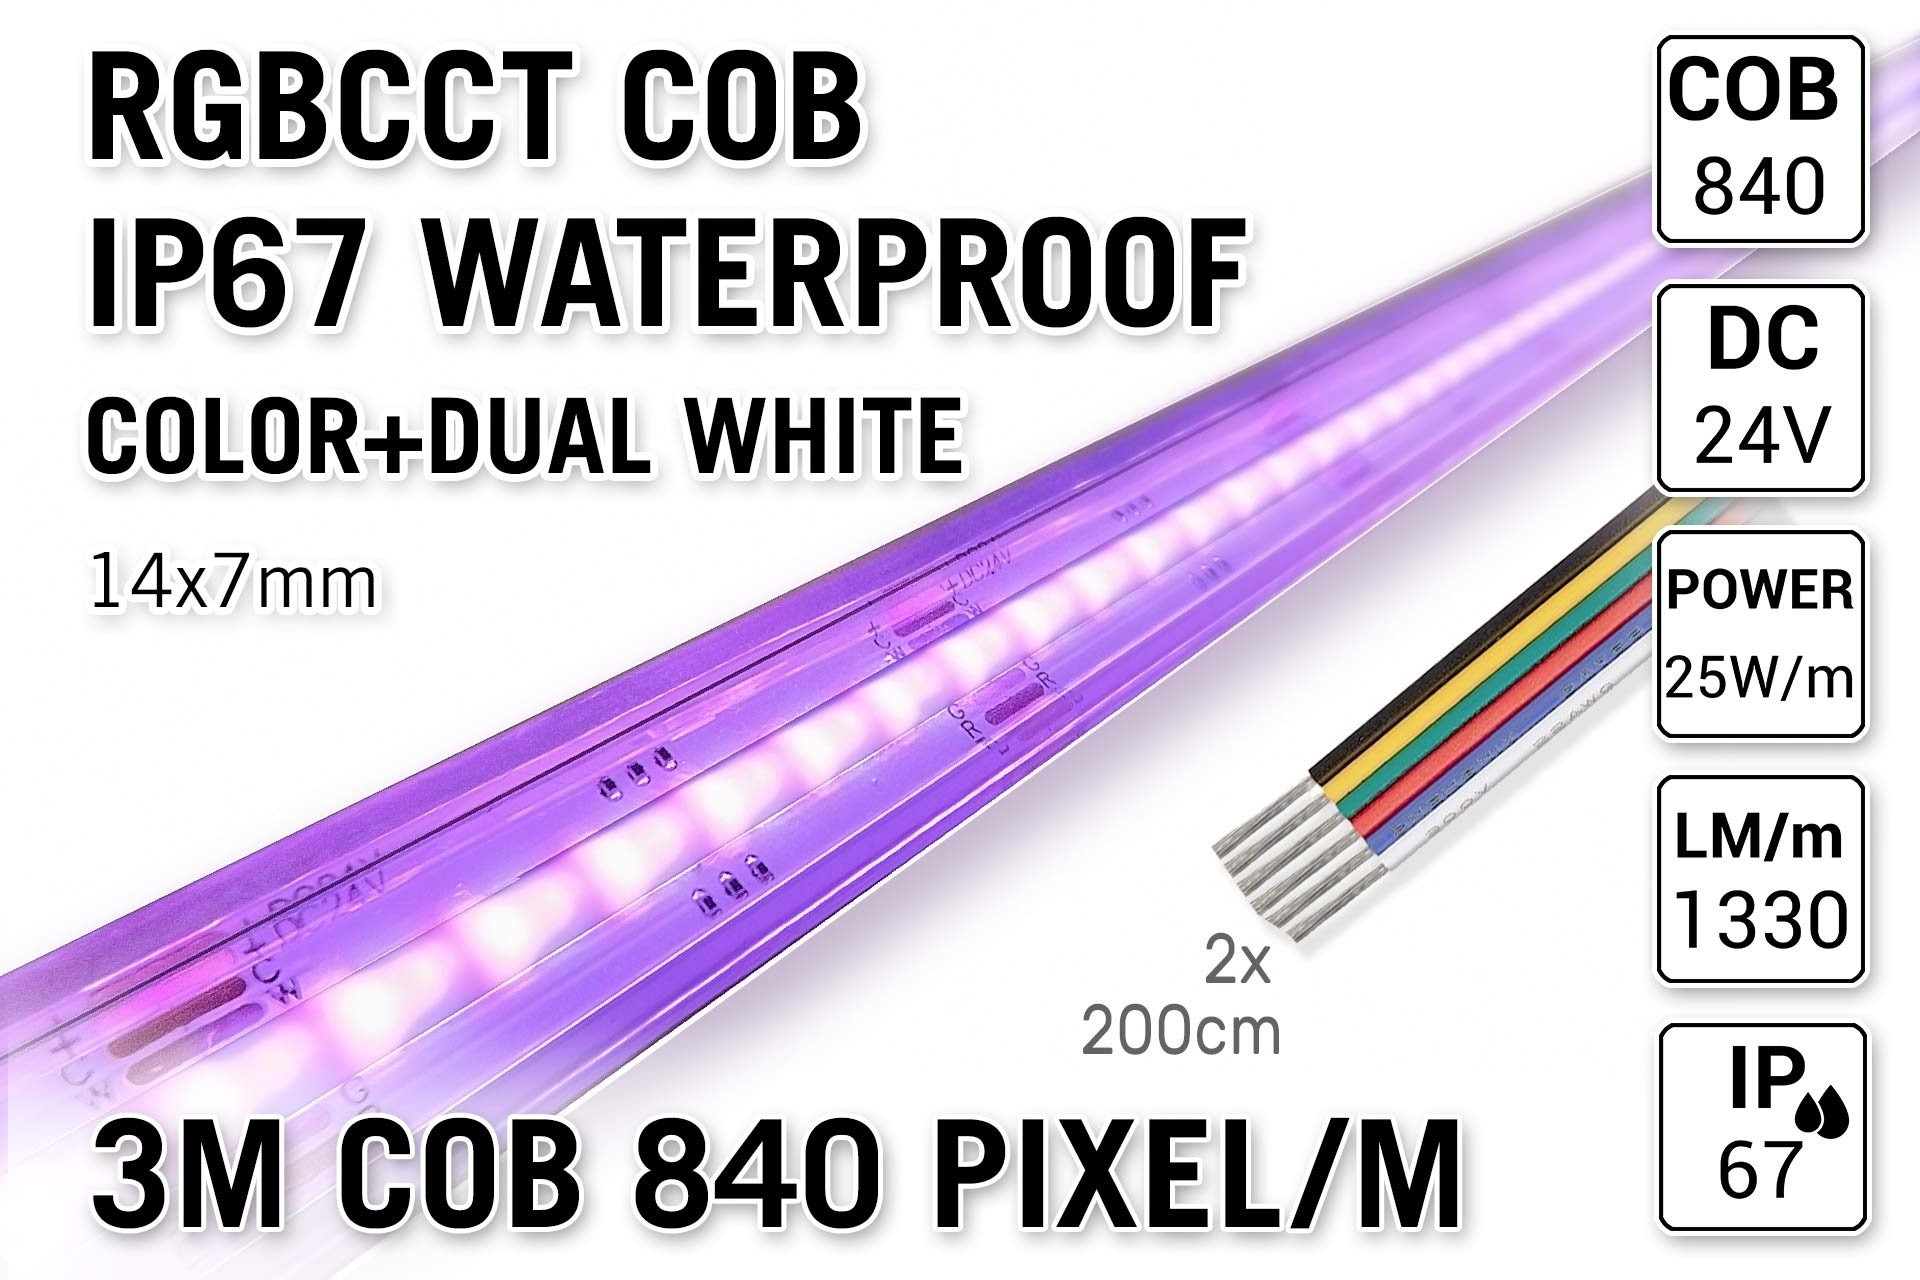 3m COB RGBCCT IP67 Waterproof Led Strip | 25W pm 24V | 840 pixels pm - Losse Strip